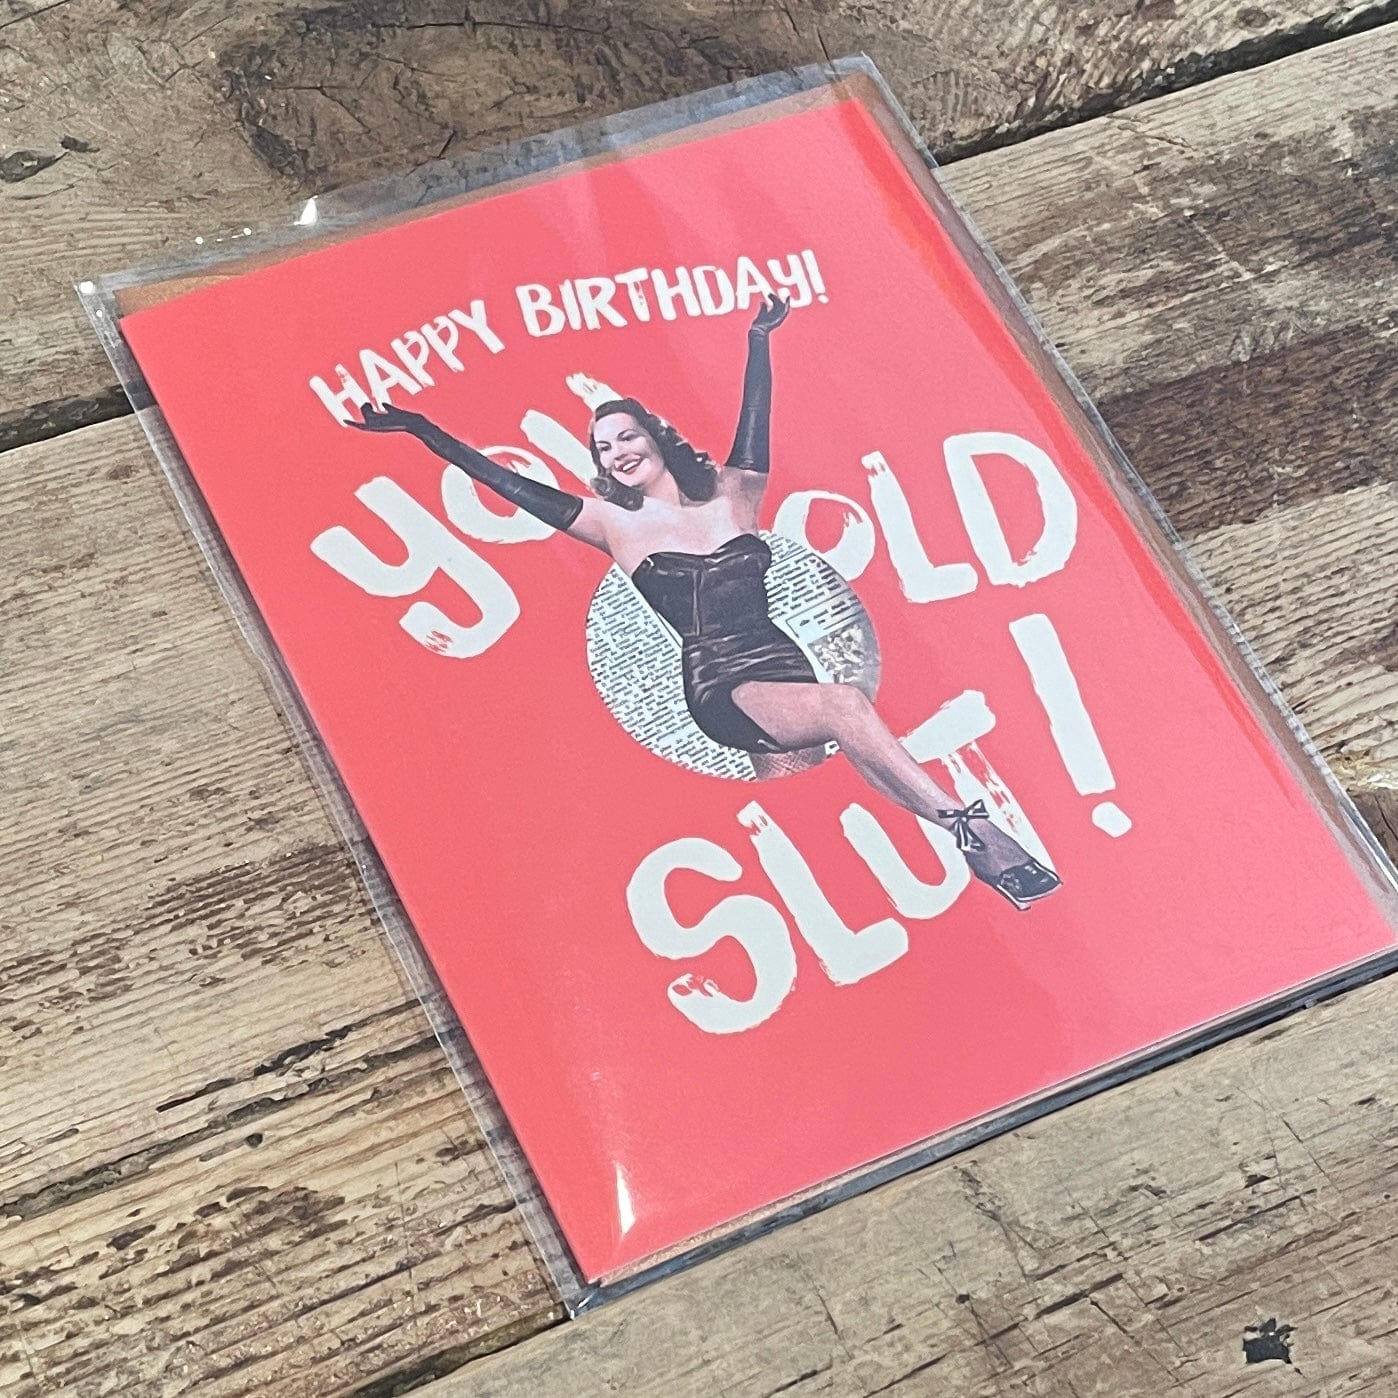 Old Slut Offensive Delightful Greeting Card - PORCH